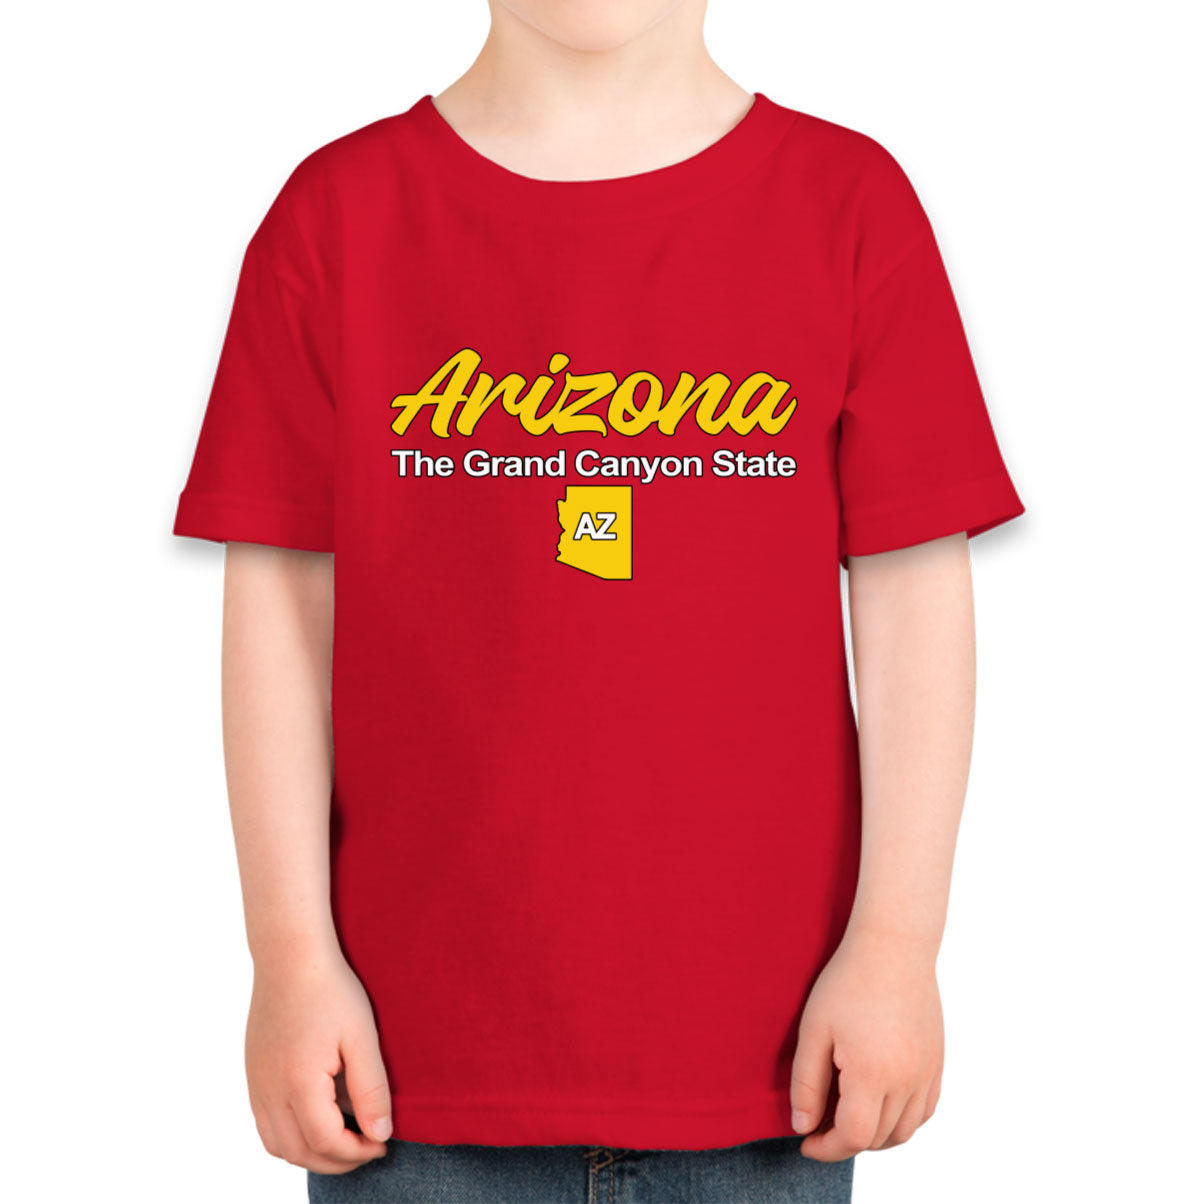 Arizona The Grand Canyon State Toddler T-shirt